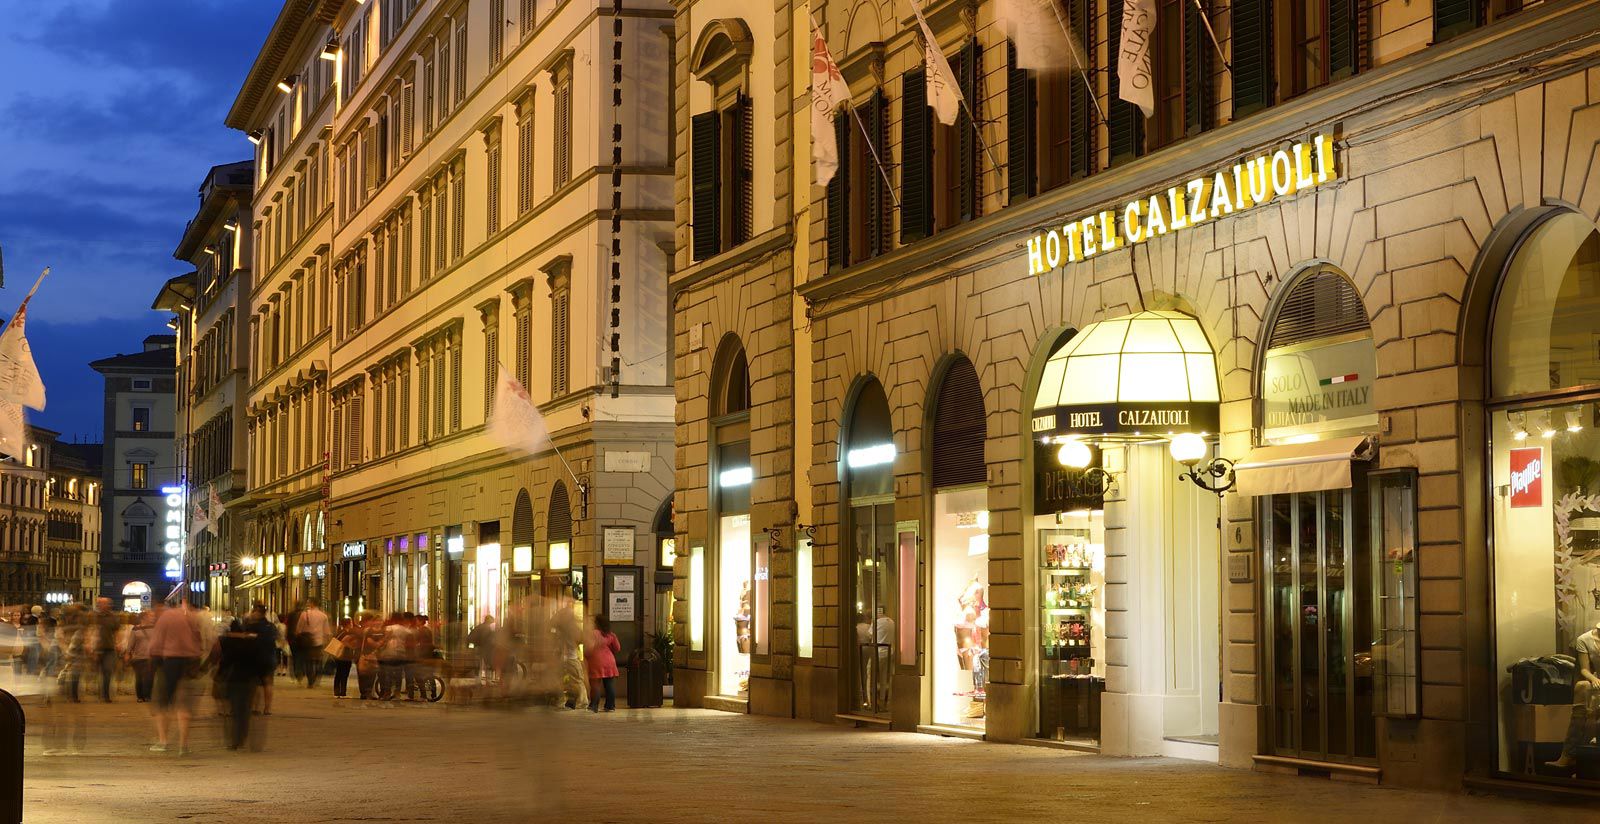 Hotel Calzaiuoli - Shopping weekend in Florence 4